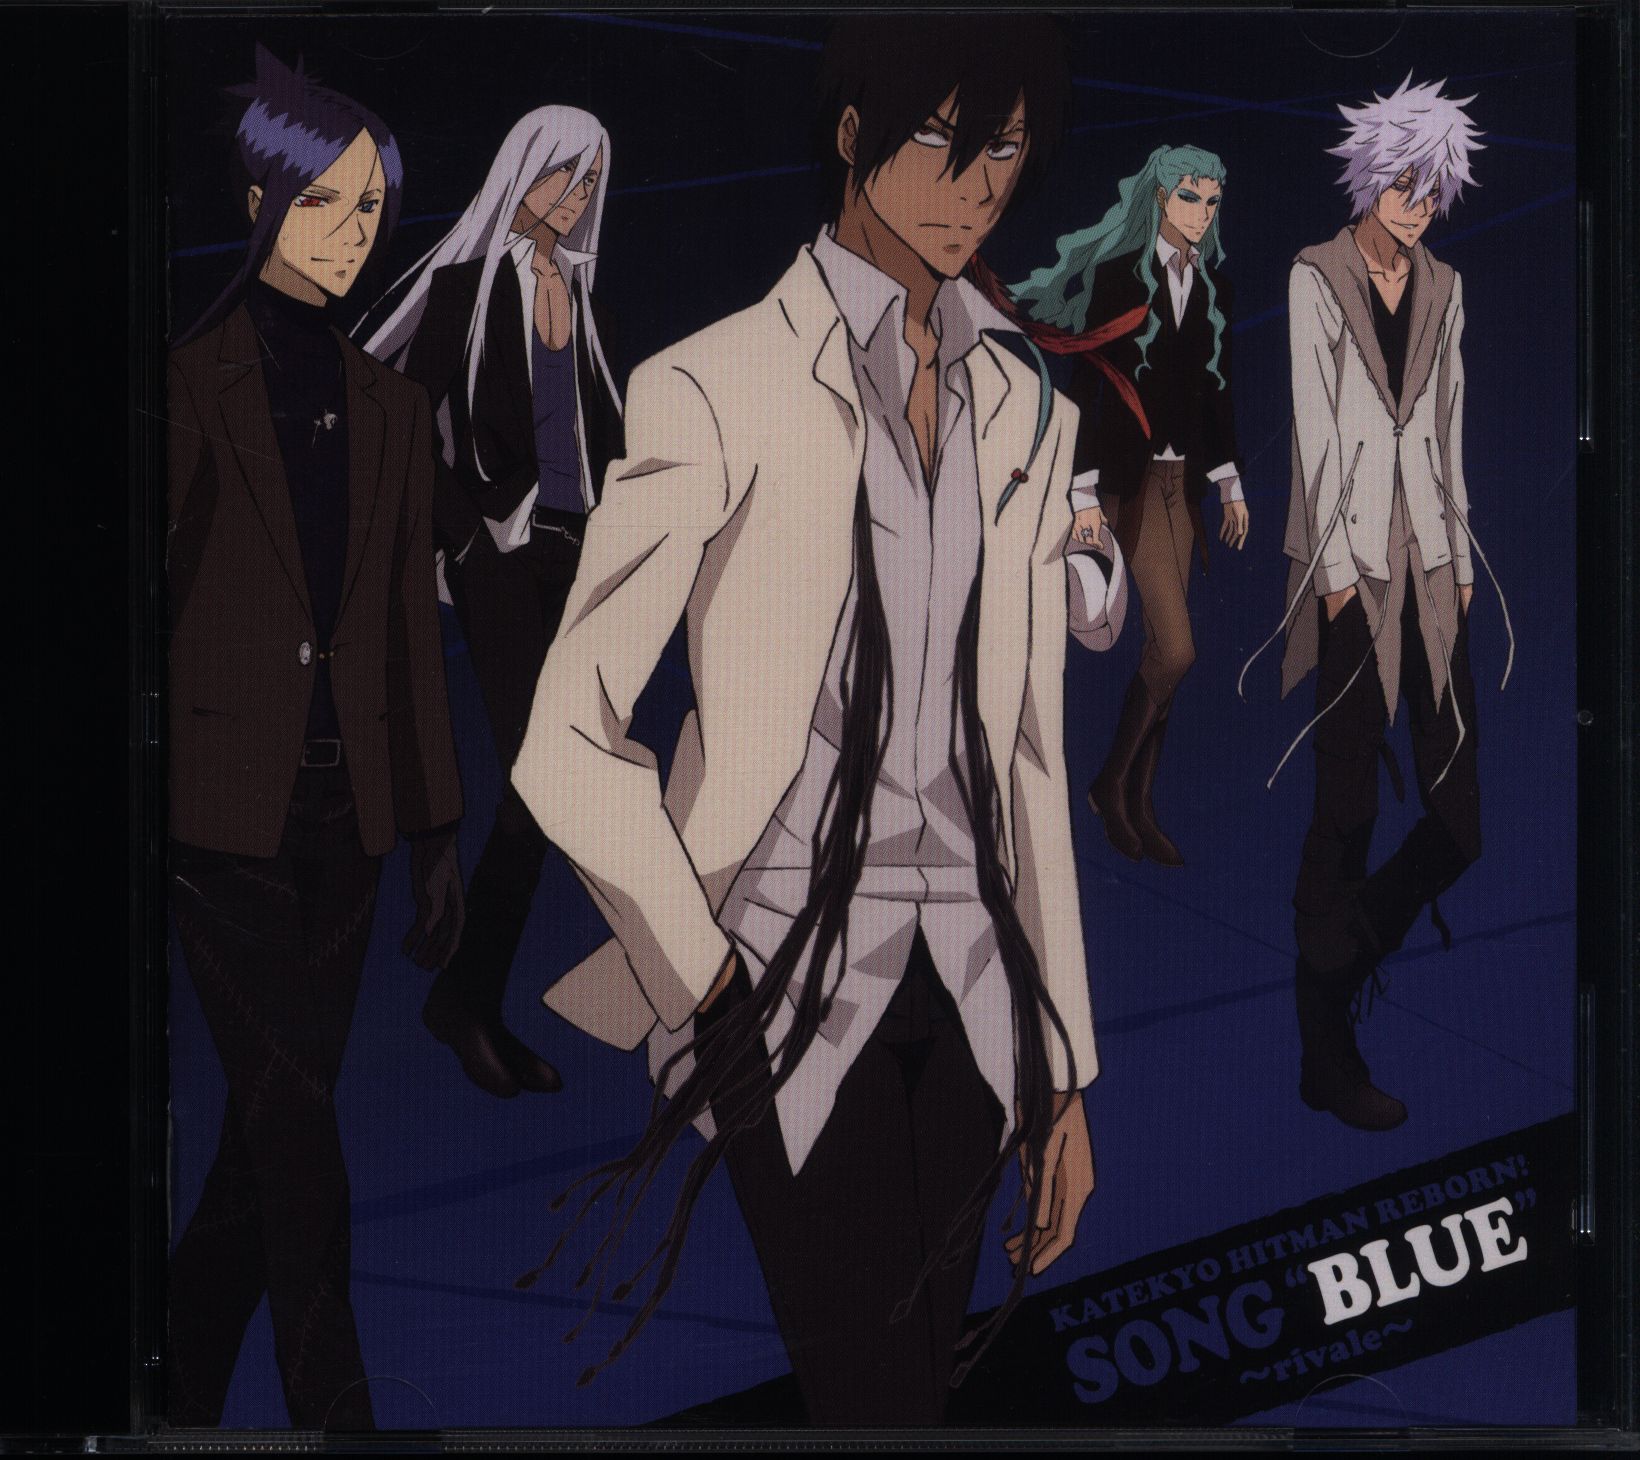 Song Blue - Rivale - (Tv Anime “Katekyo Hitman Reborn!”) Character